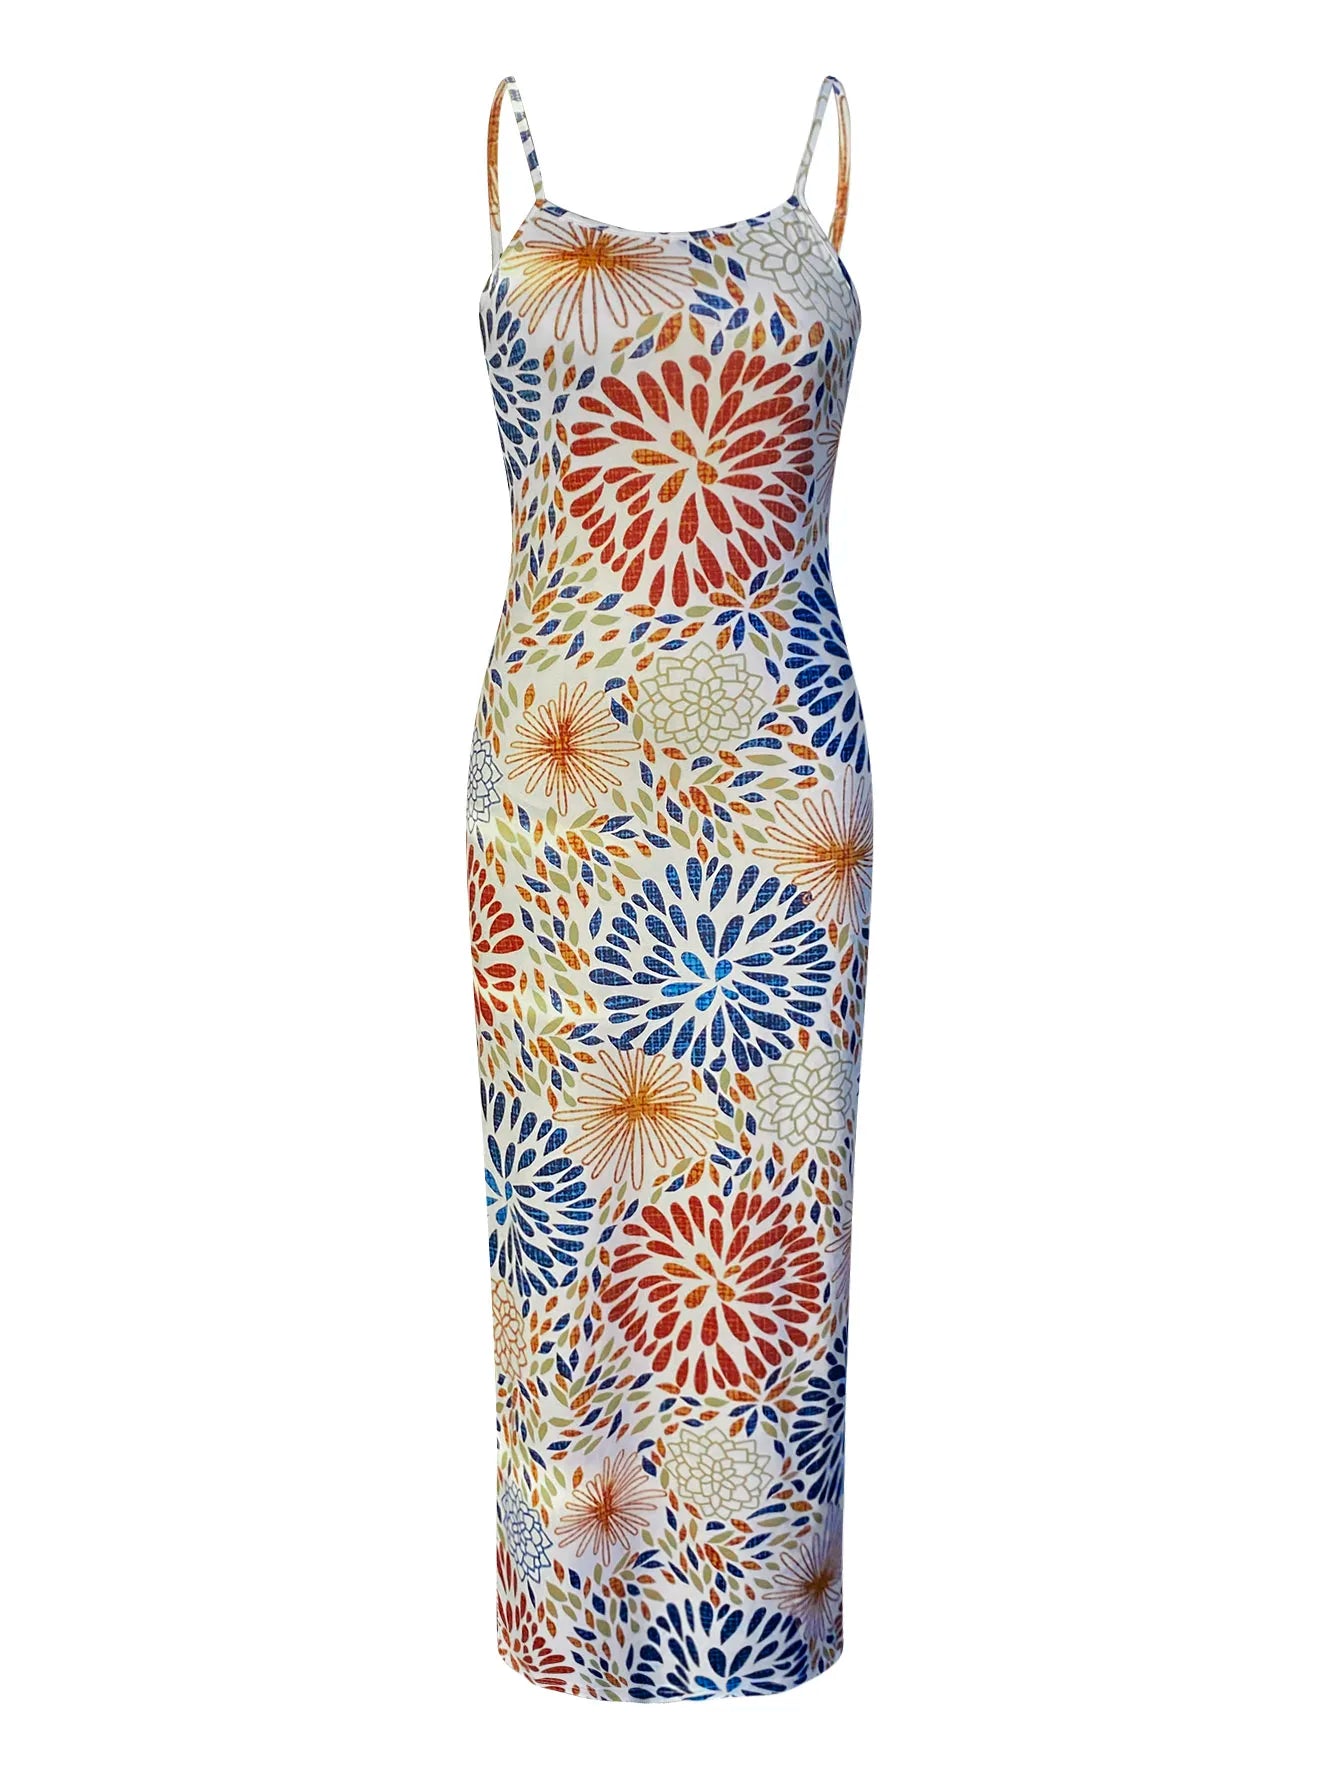 lovwvol Casual Pattern Mixed Flower Print Maxi Dress Spring Summer Women New Sleeveless Pattern Ankle Length Vacation Dresses